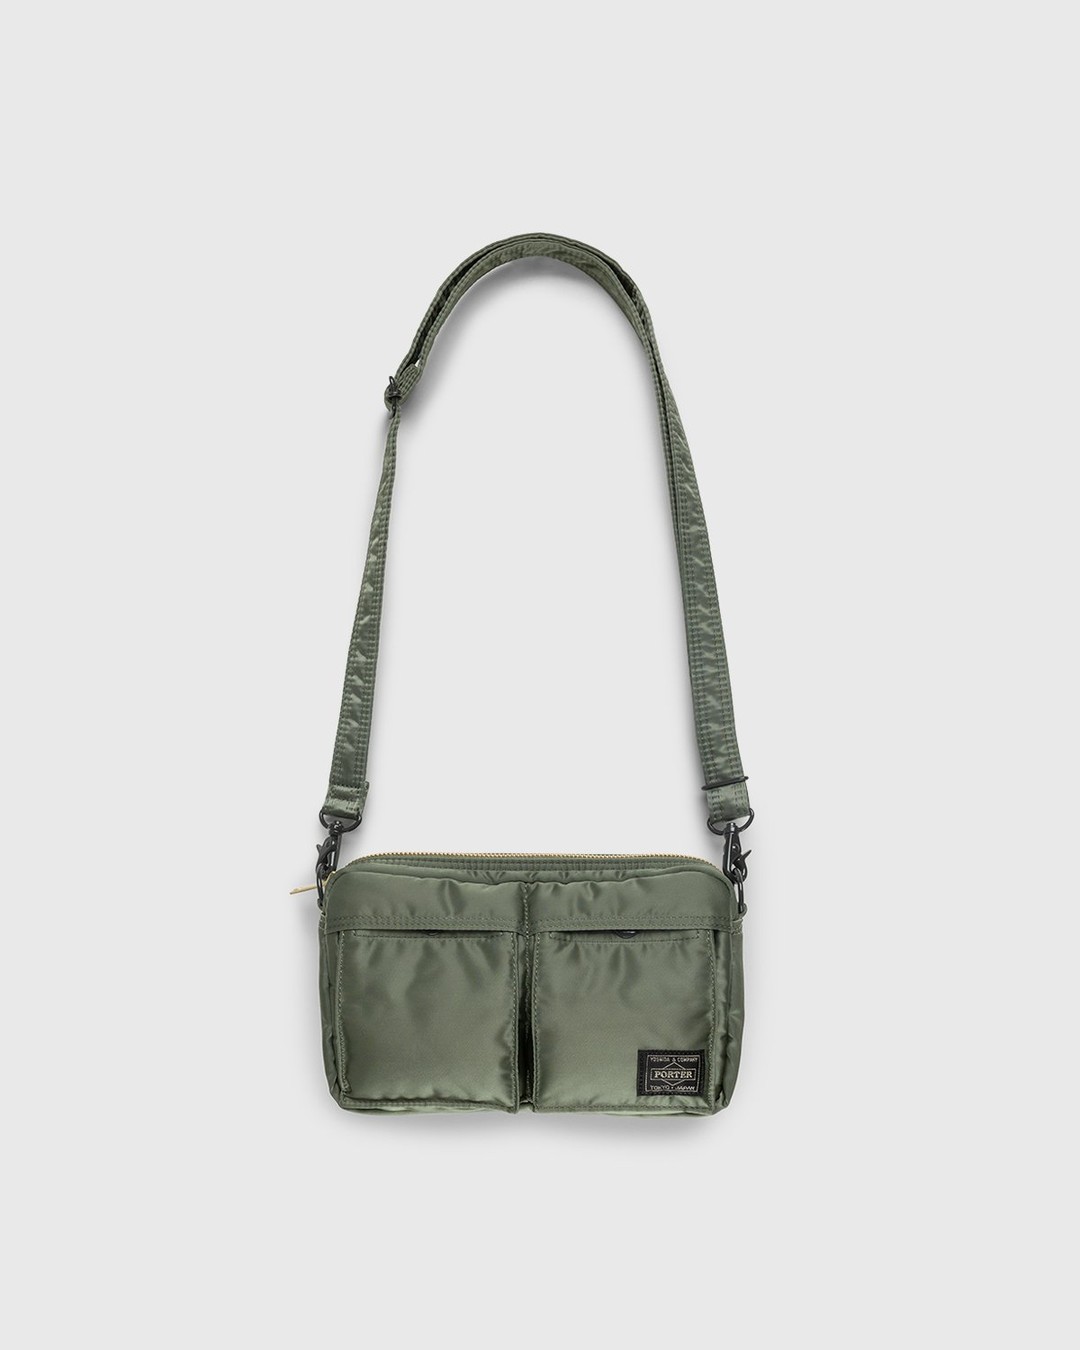 Porter Yoshida Tanker Shoulder Bag (1st Class) – Sage Green